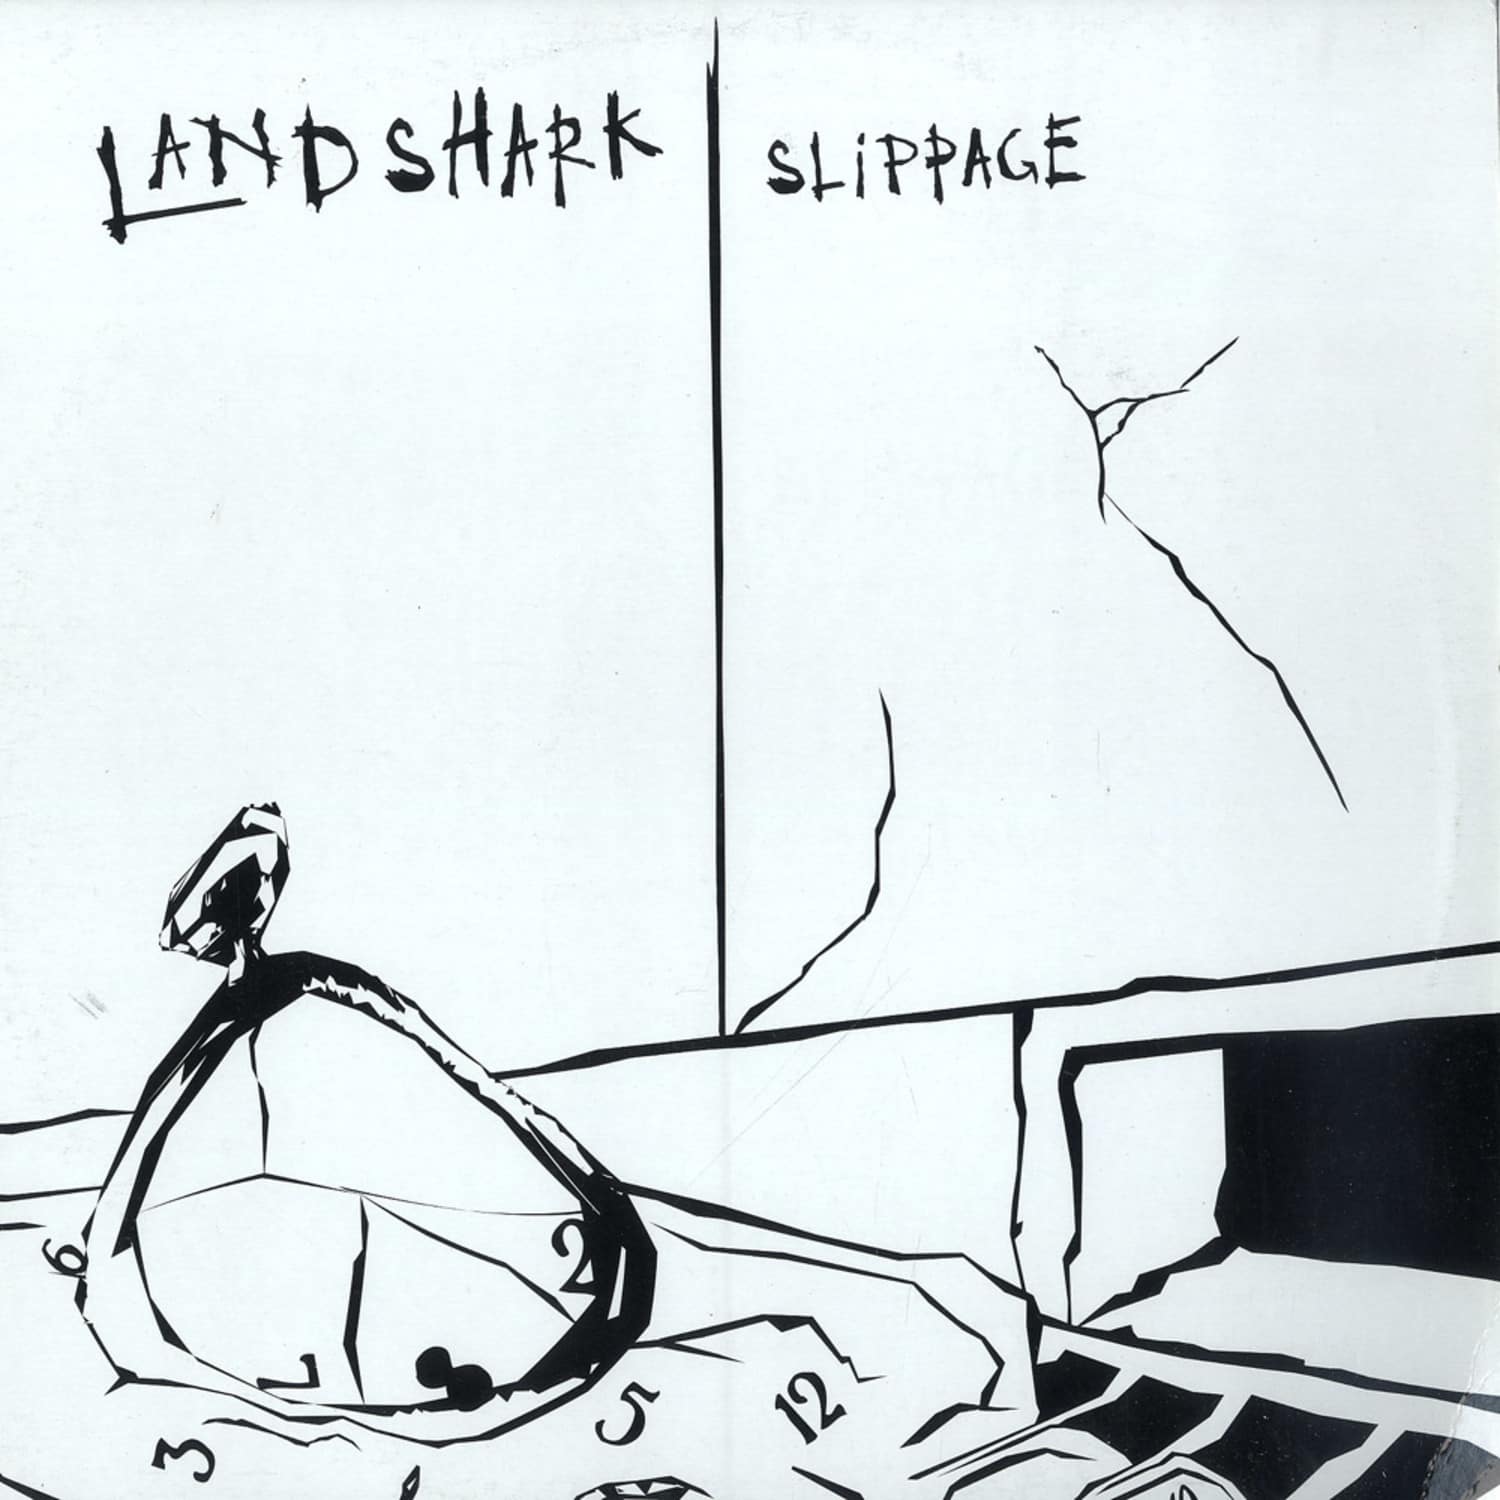 Land Shark - SLIPPAGE